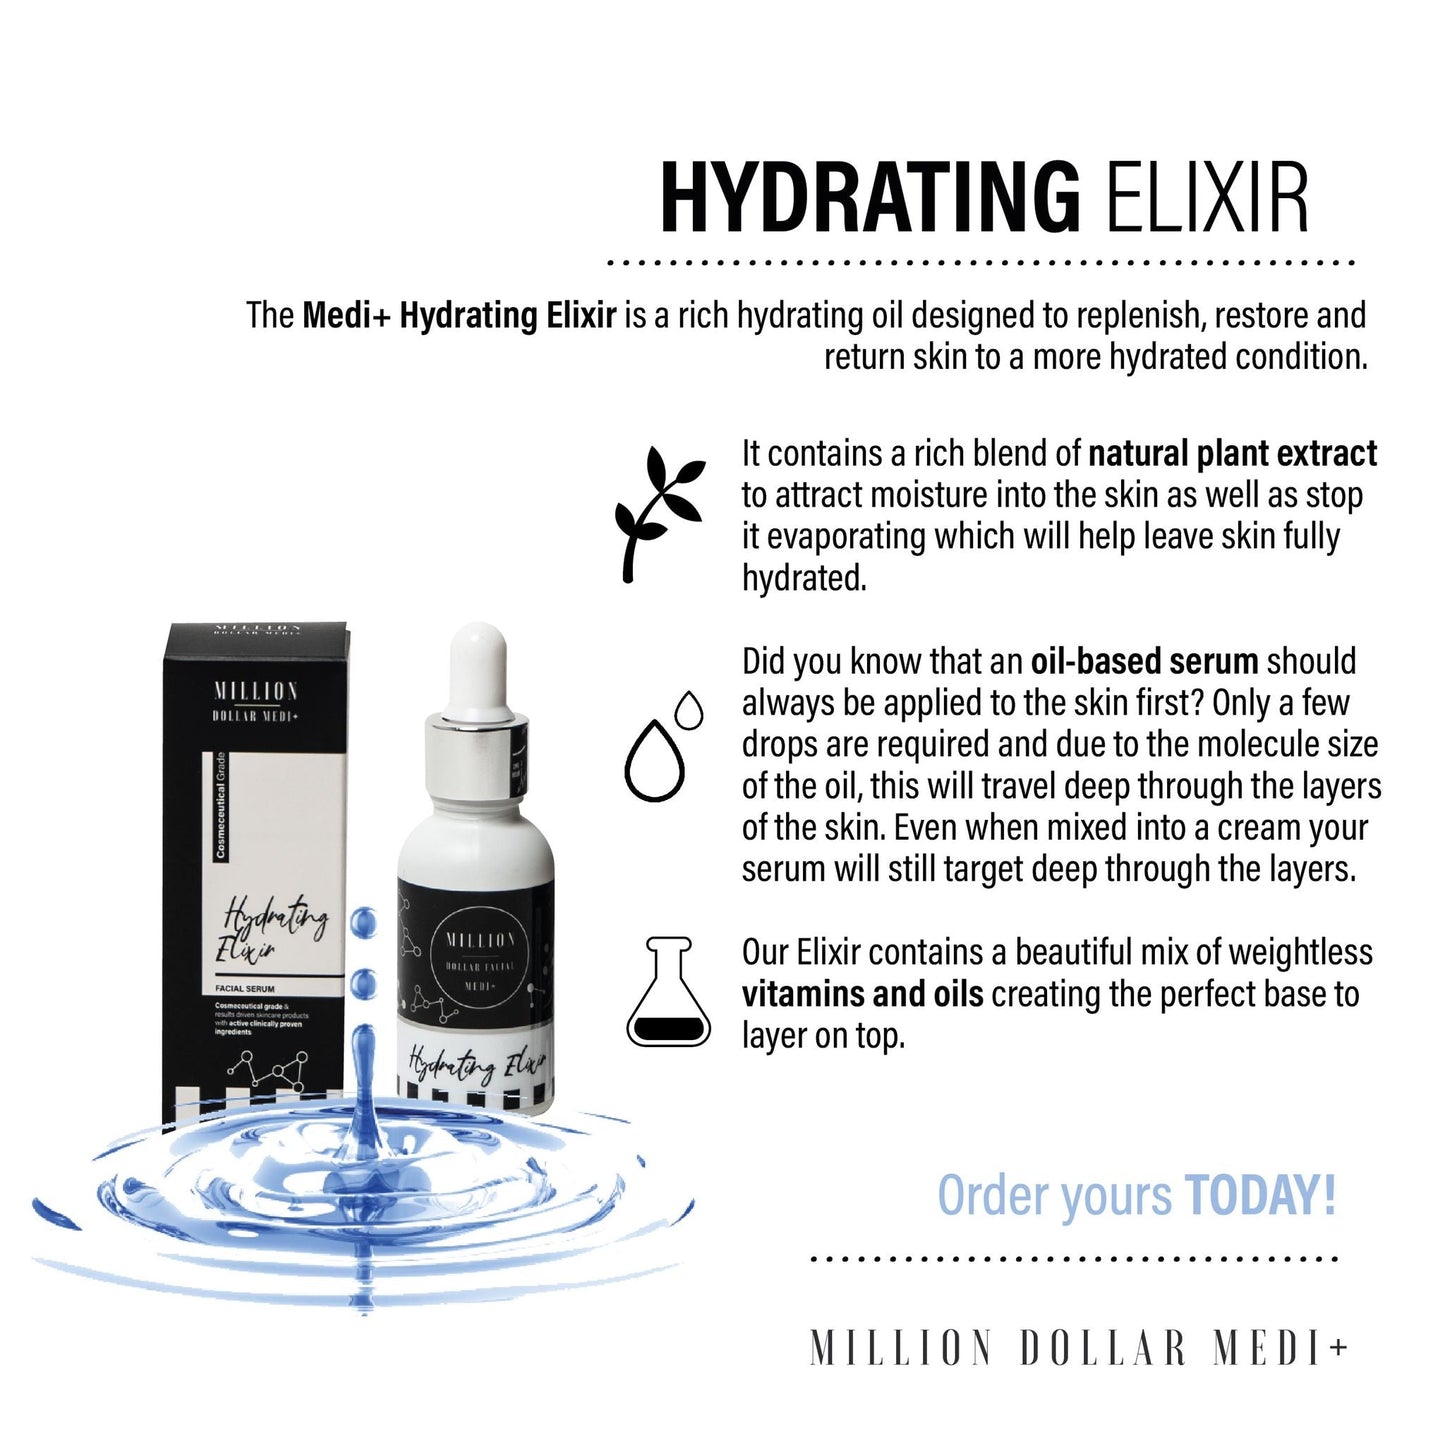 Medi+ Hydrating Elixir | Hydrating oil to replenish skin